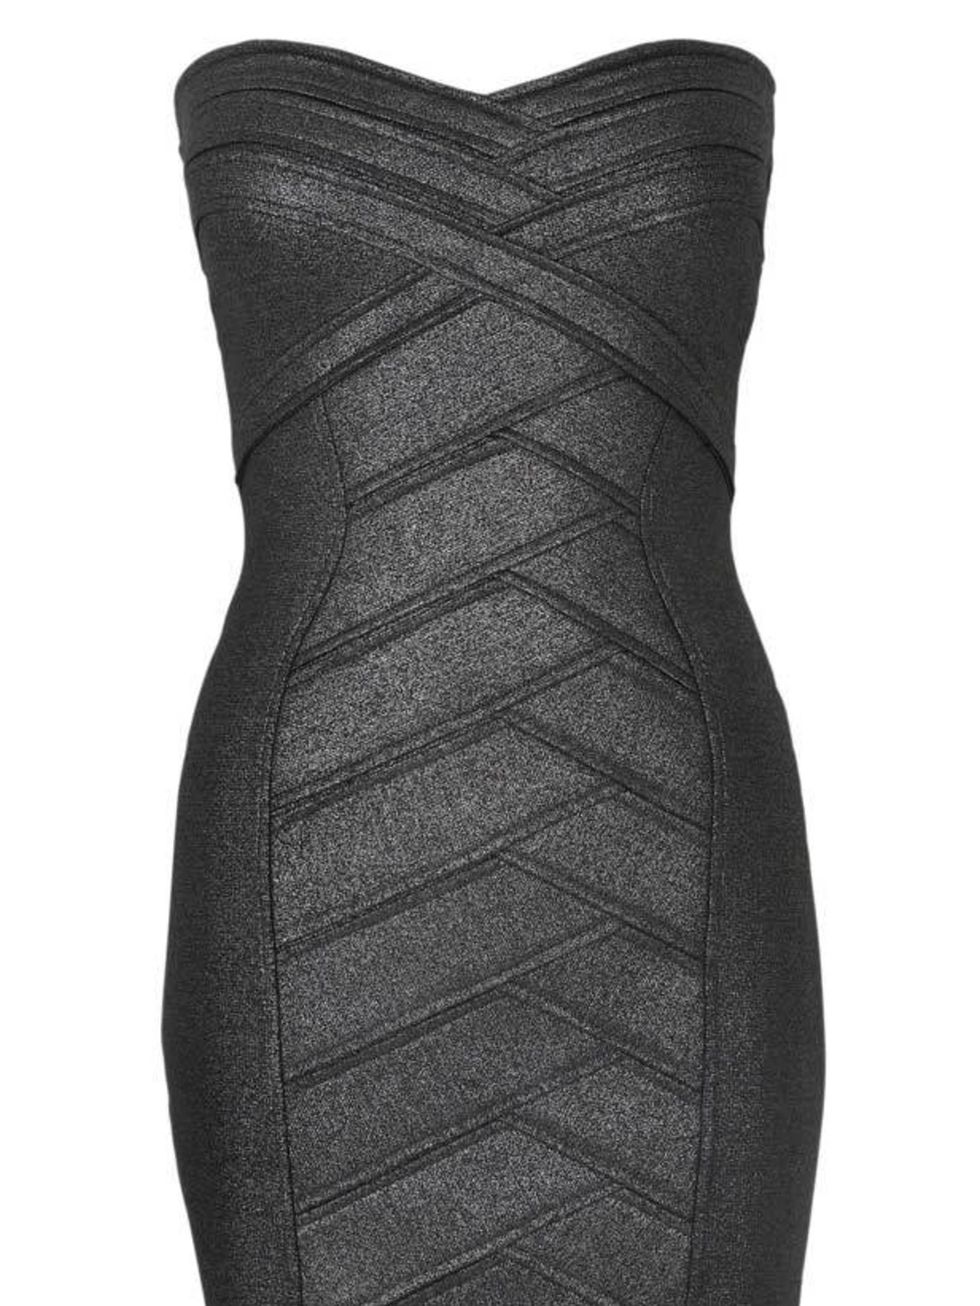 <p>Black strapless dress, £79, by Star by Julien MacDonald at Debenhams (08445 616 161)</p>